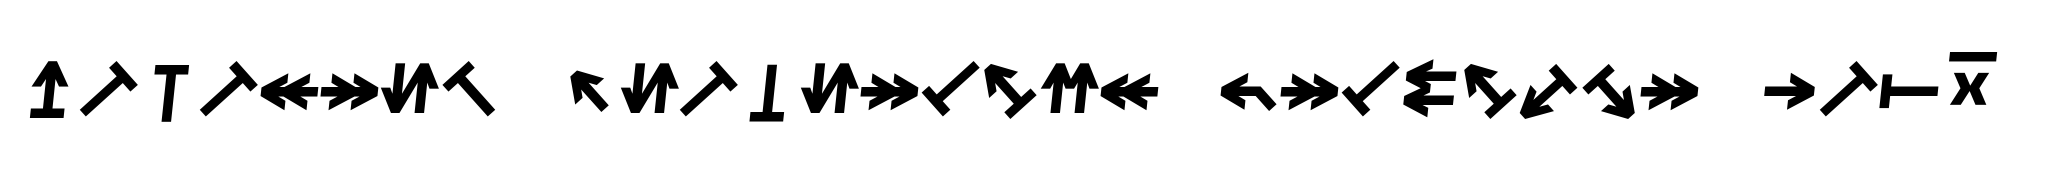 Monostep Geometrics Straight Bold Italic image